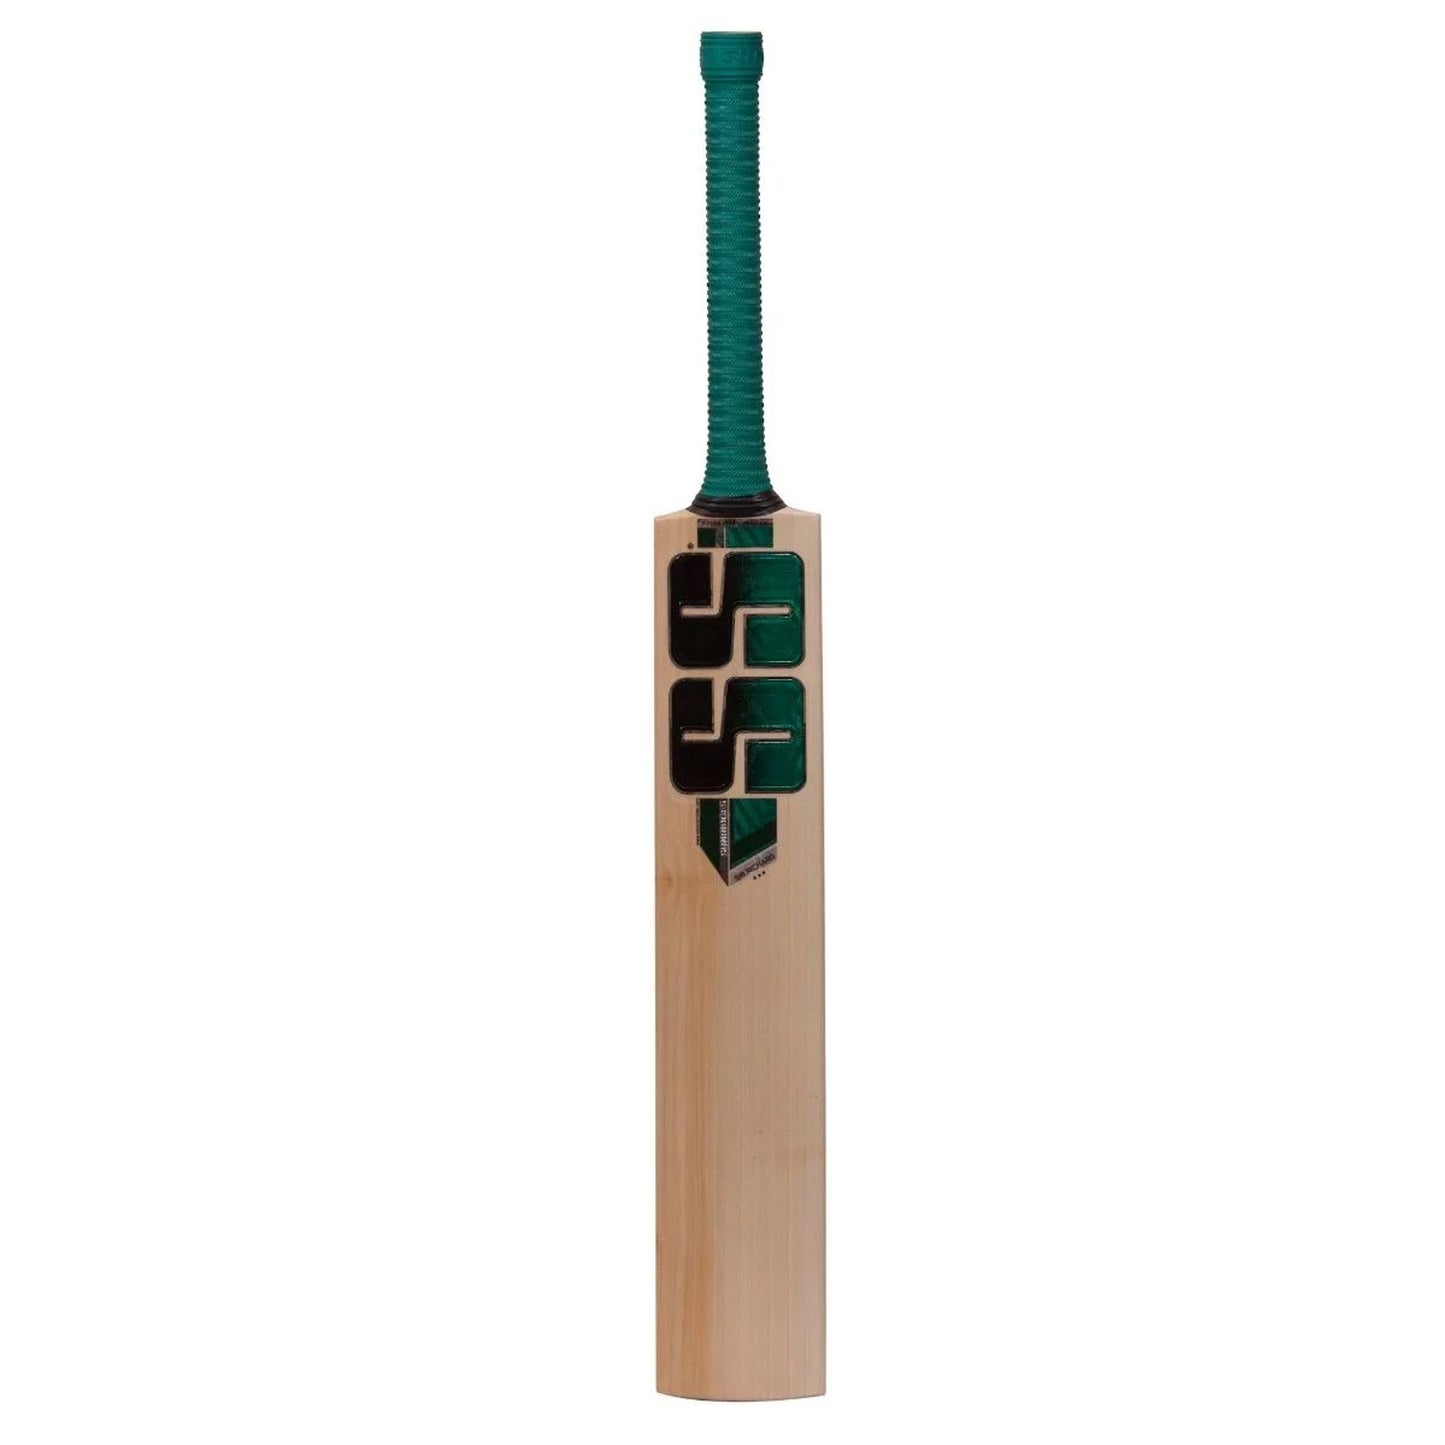 SS Sir Richard English Willow Cricket Bat - Best Price online Prokicksports.com